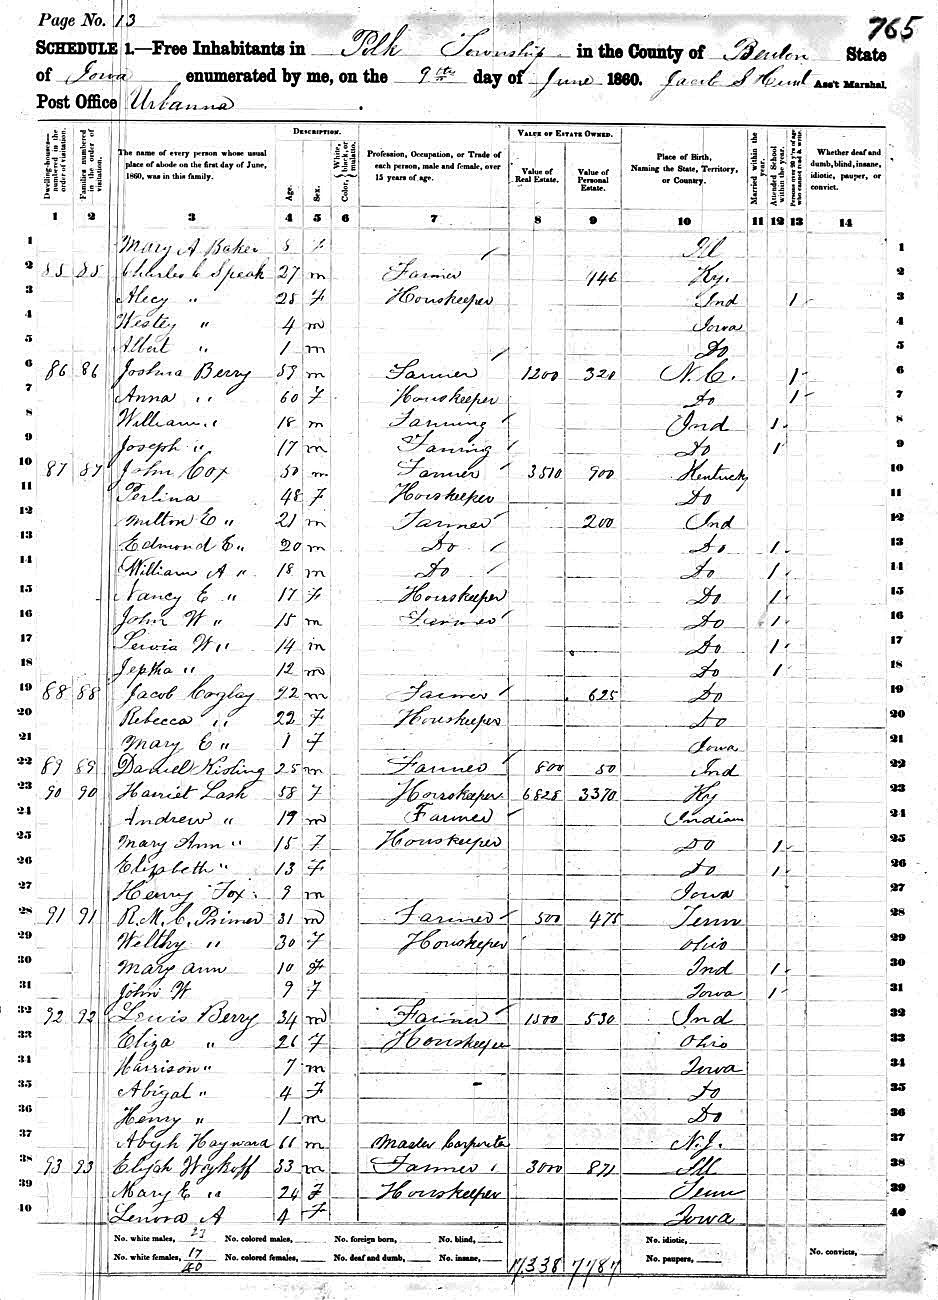 1860 Benton County census Josh Jr.